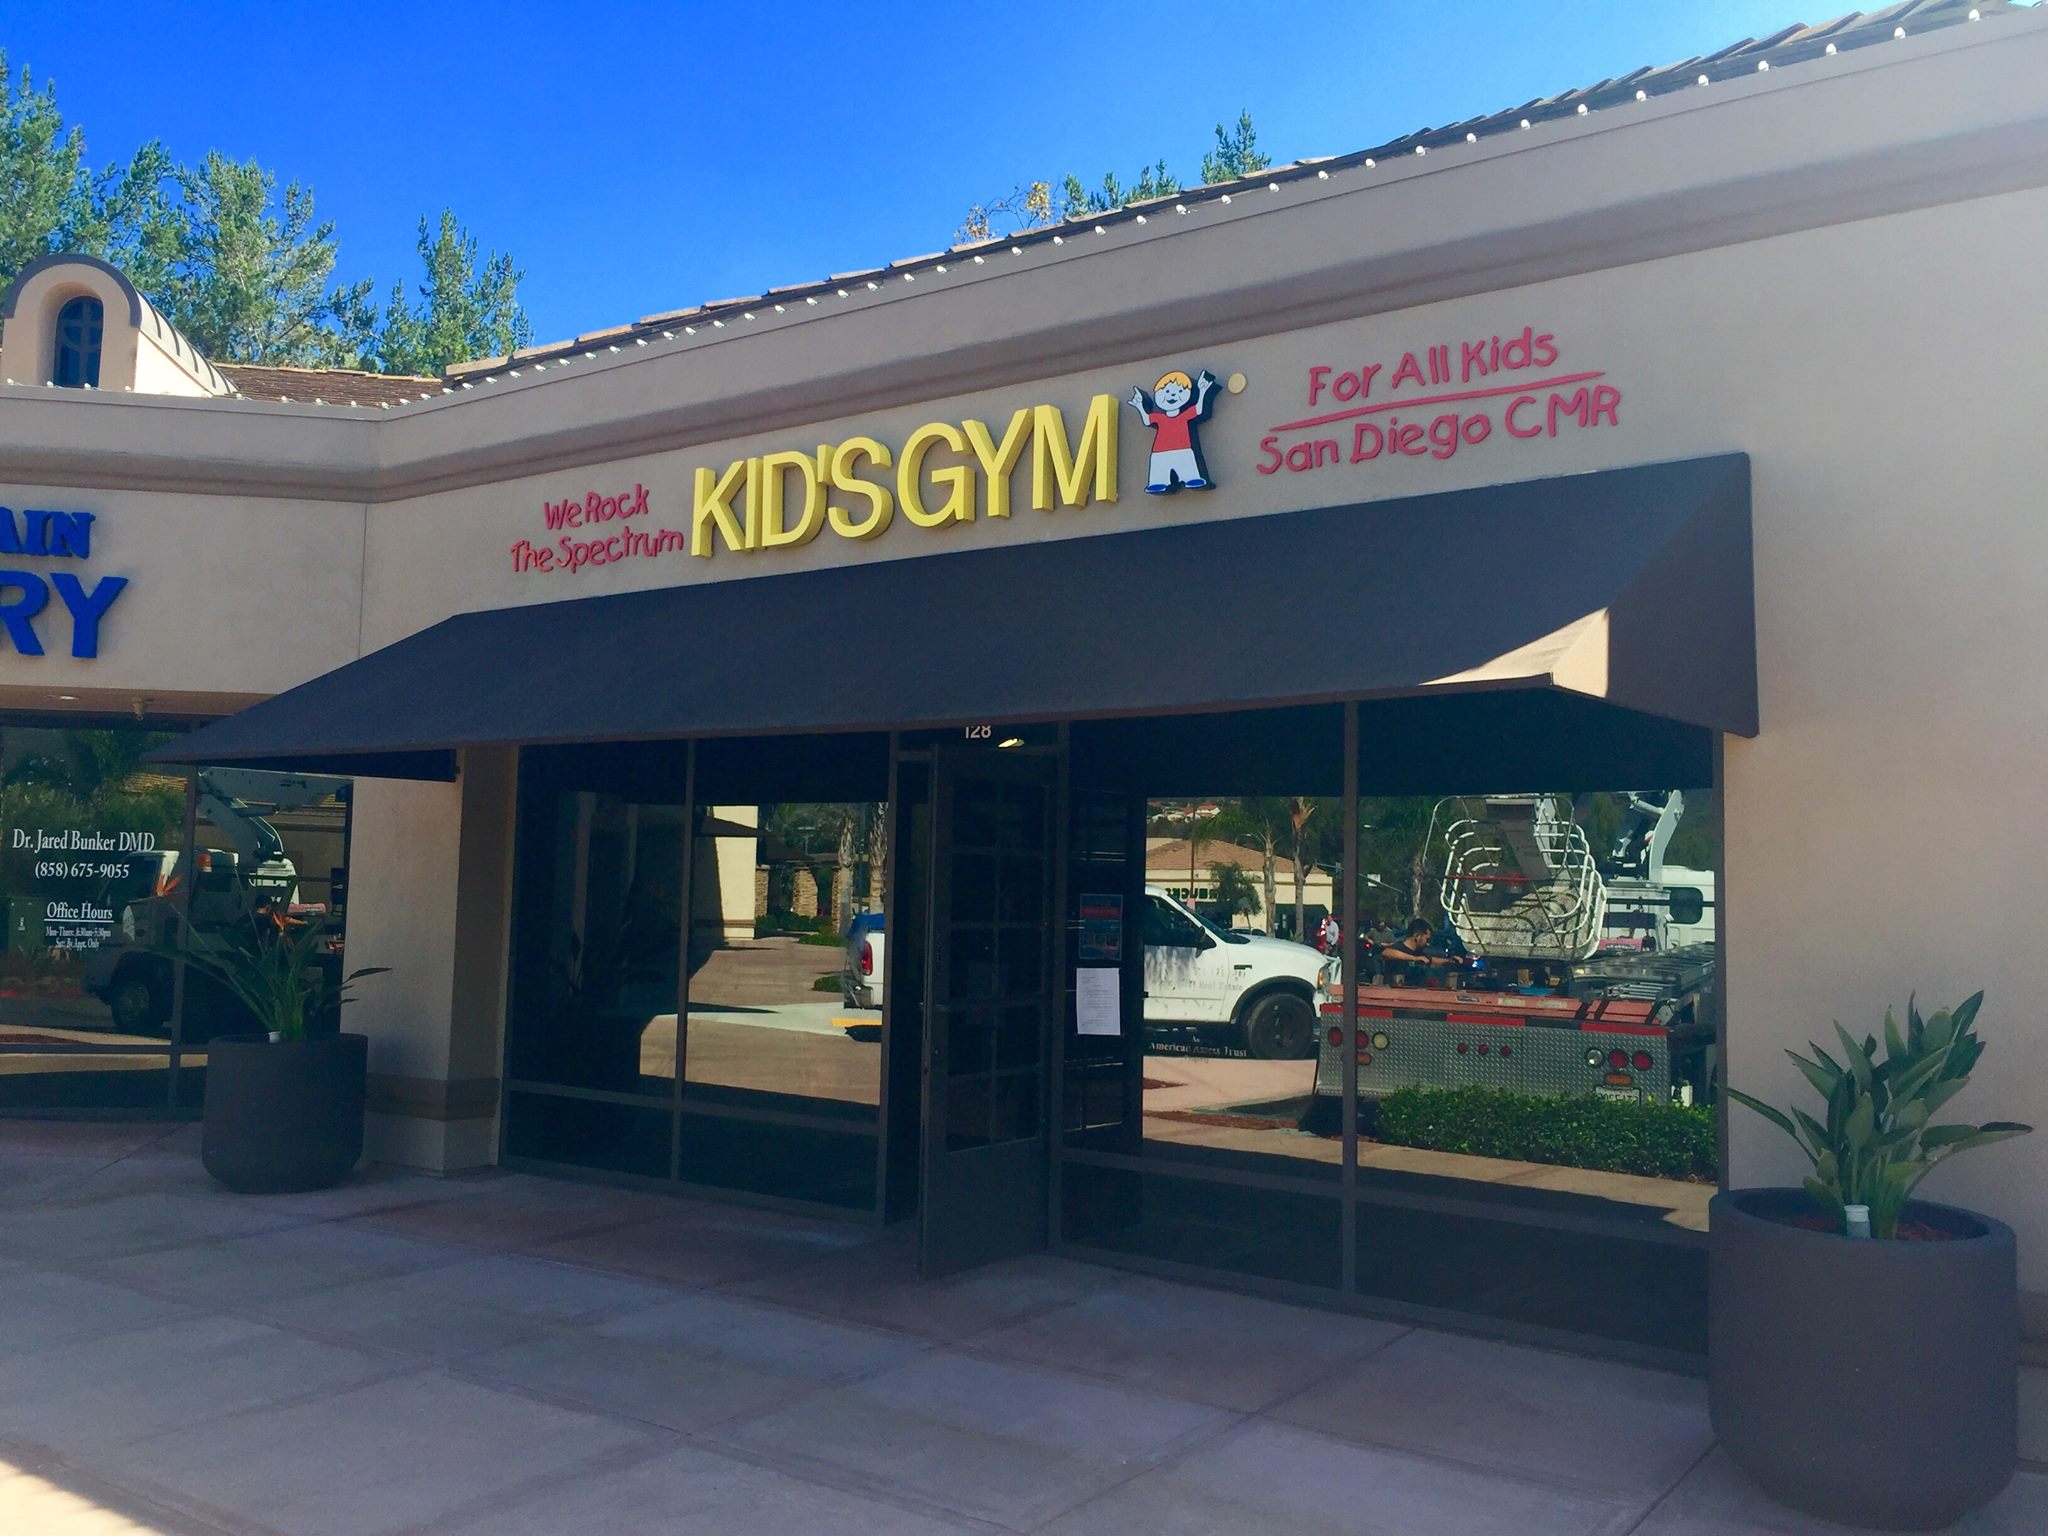 We Rock the Spectrum Kid's Gym - San Diego, CMR logo